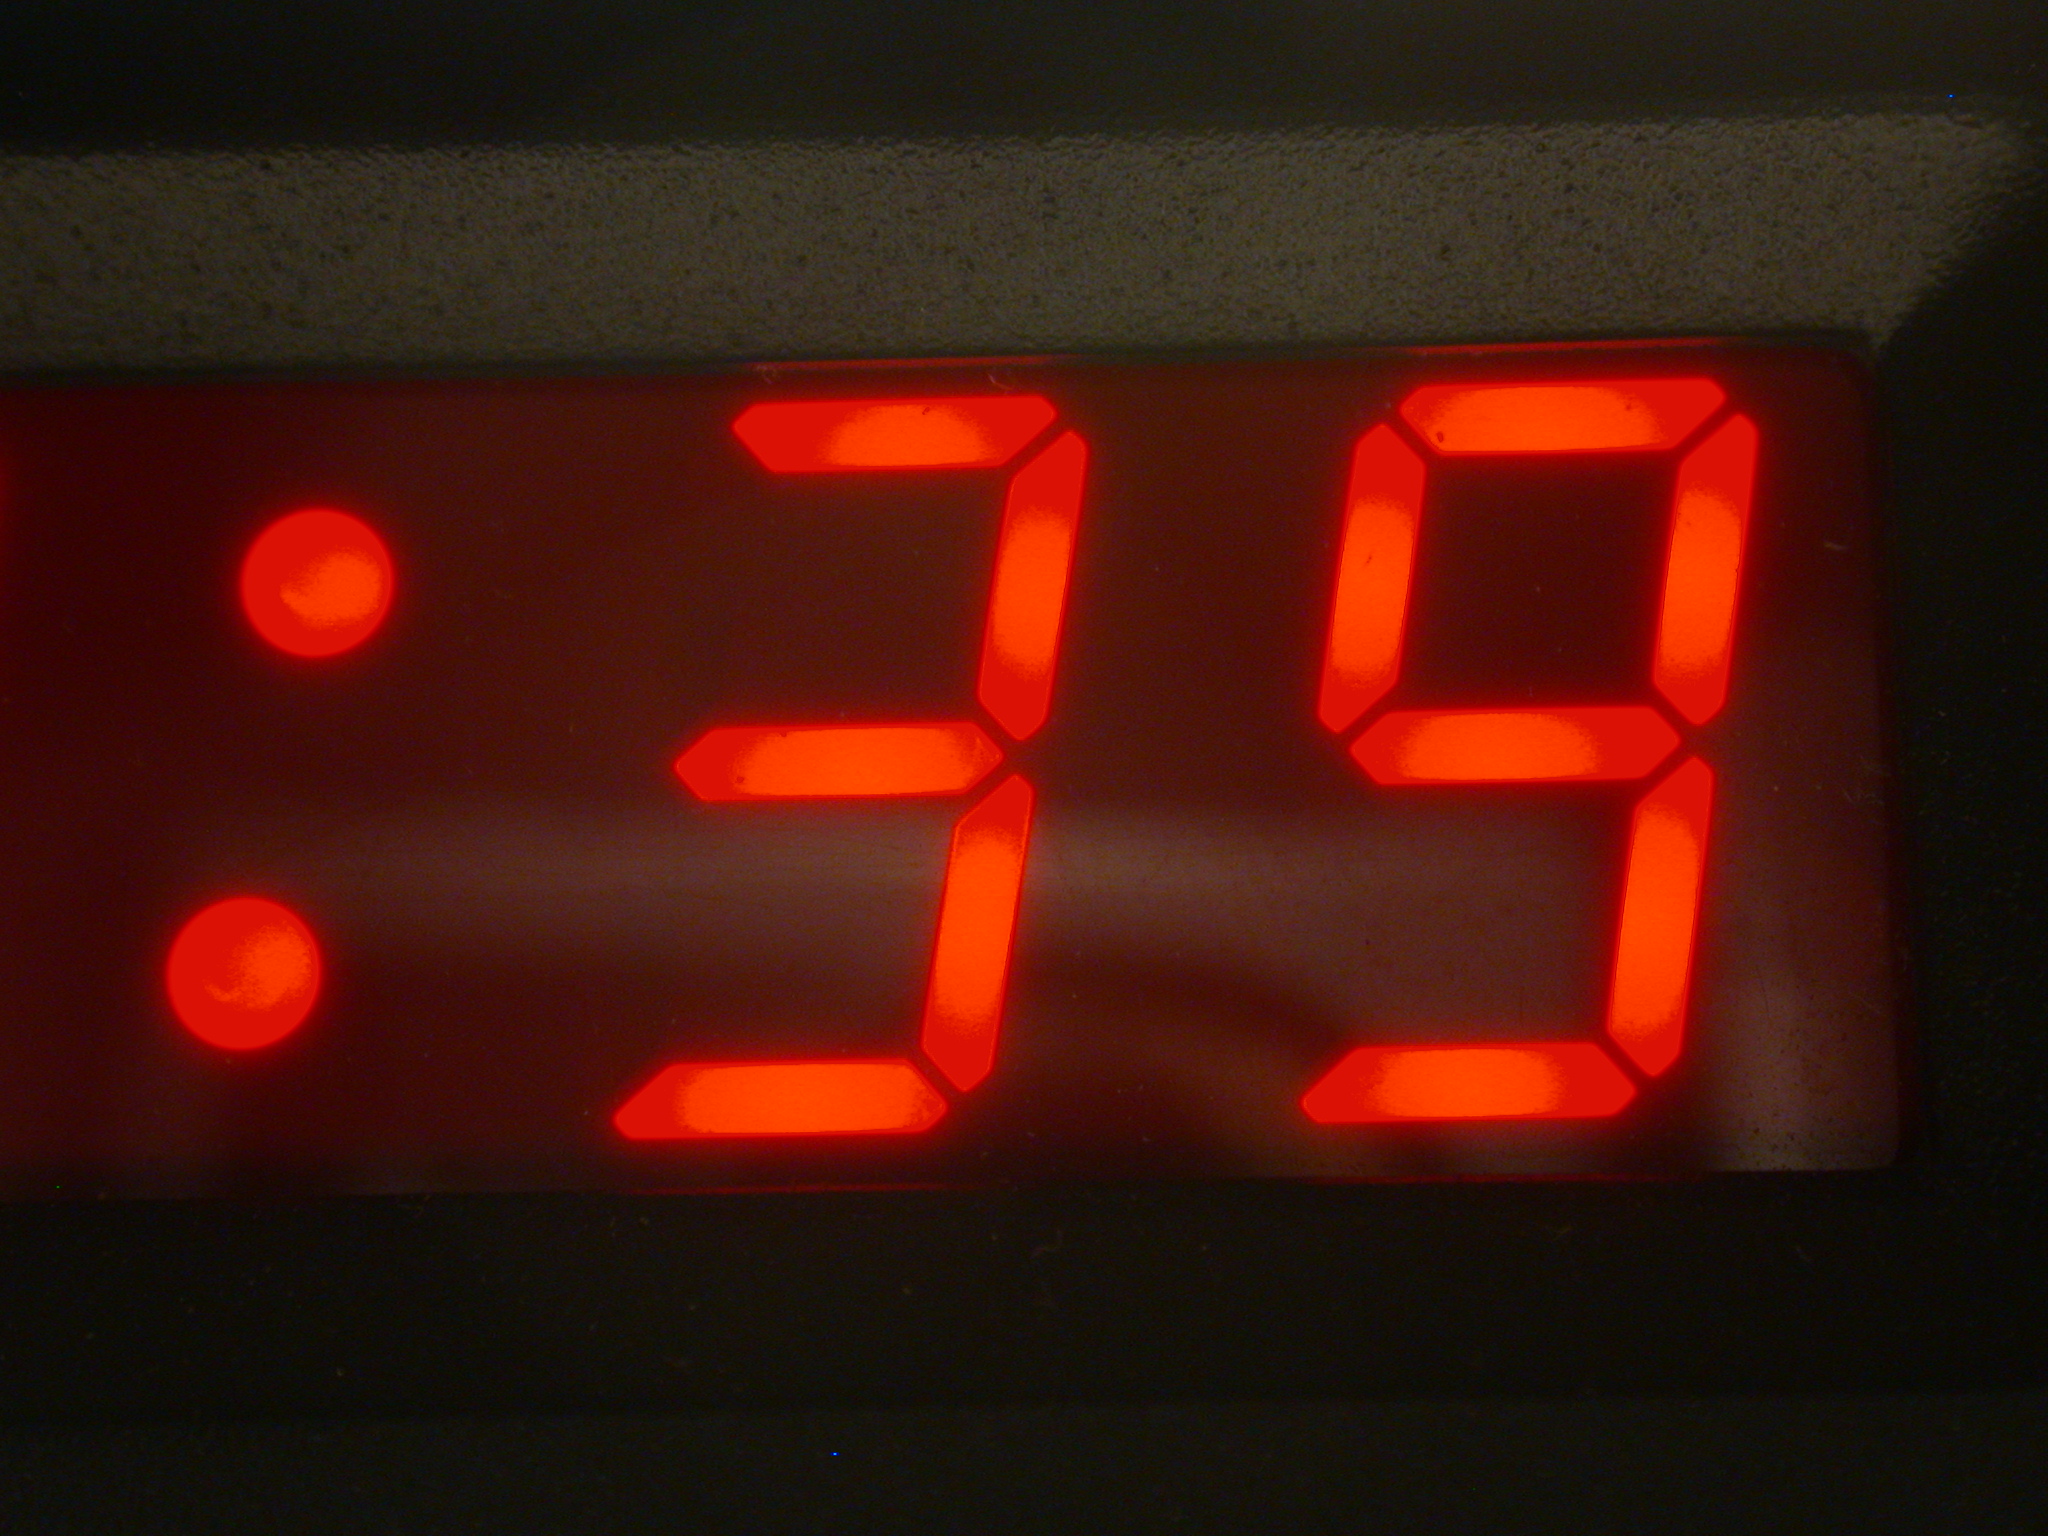 scripts led lights numbers clock time seconds 39 3 9 : alarm alarmclock